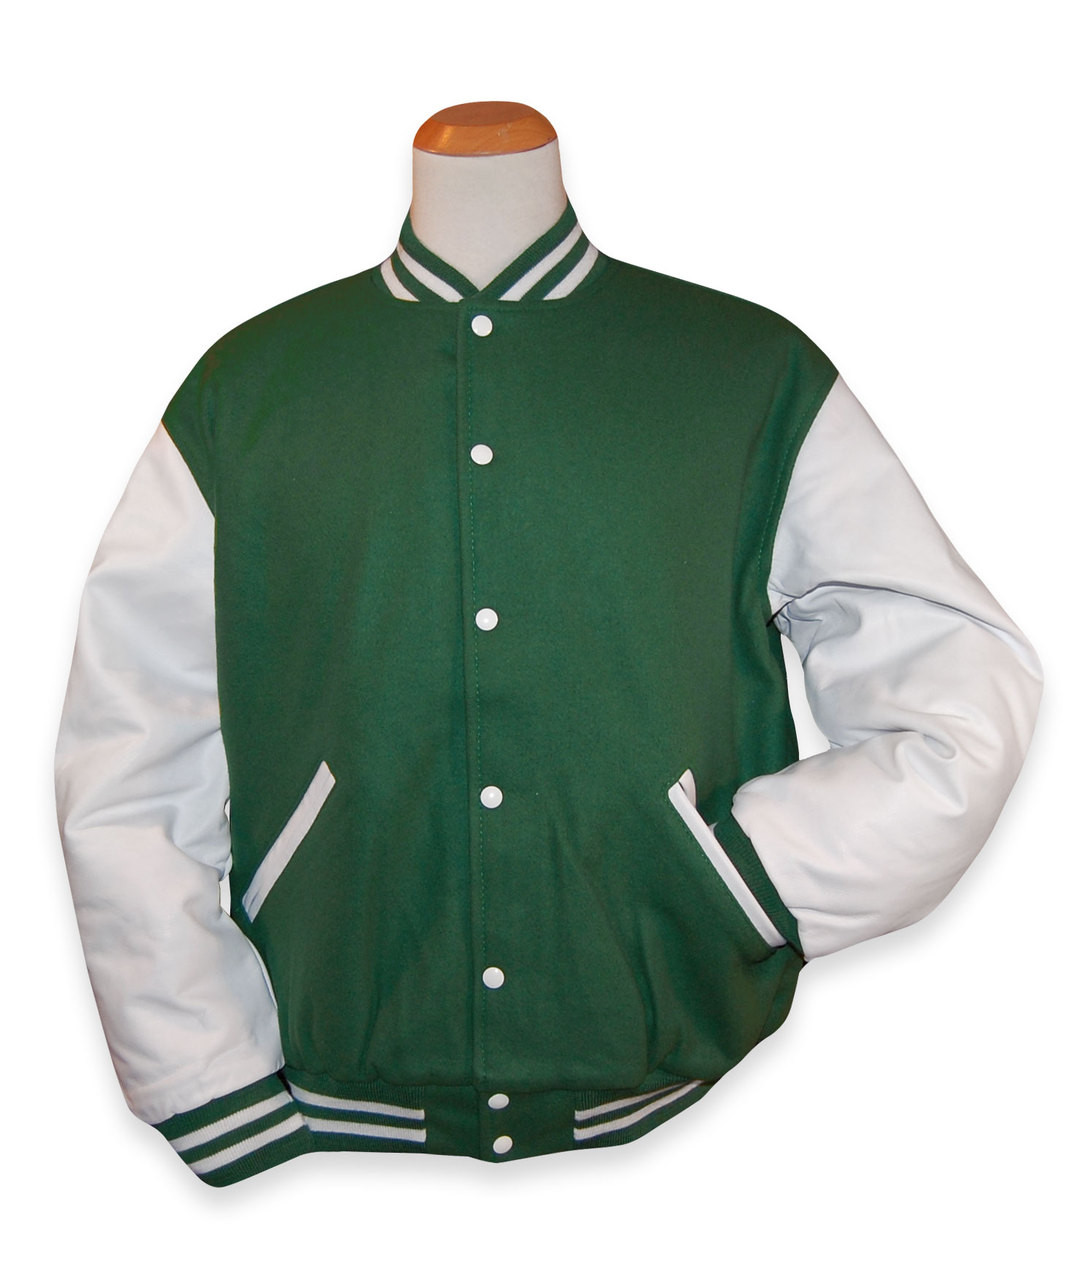 4-H Green and White Varsity Jacket - Jacketars